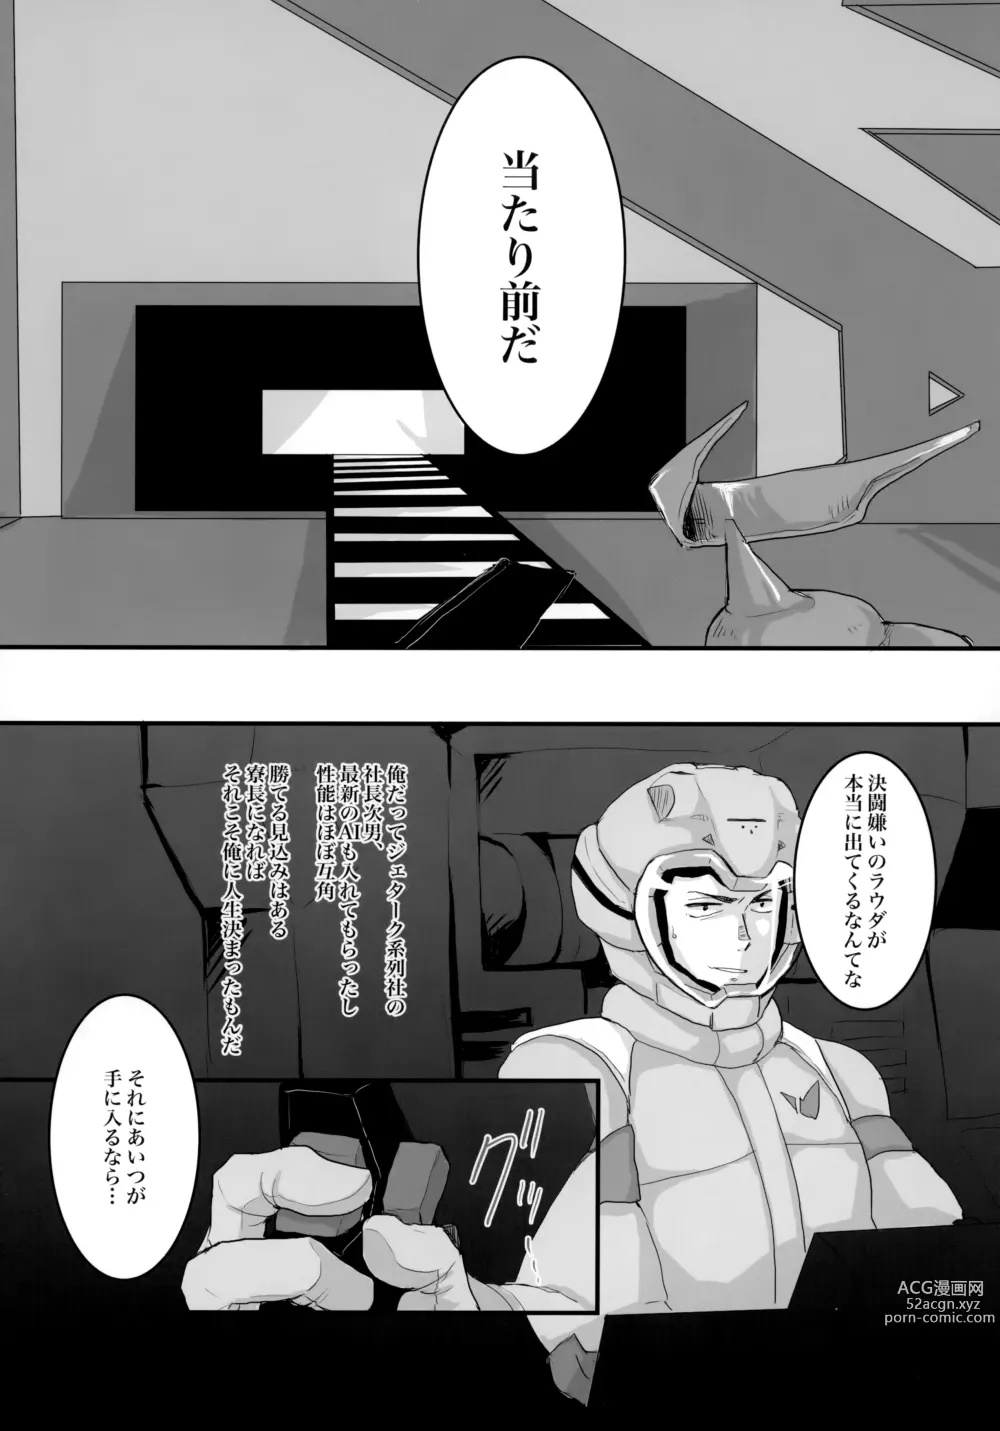 Page 46 of doujinshi Torikago